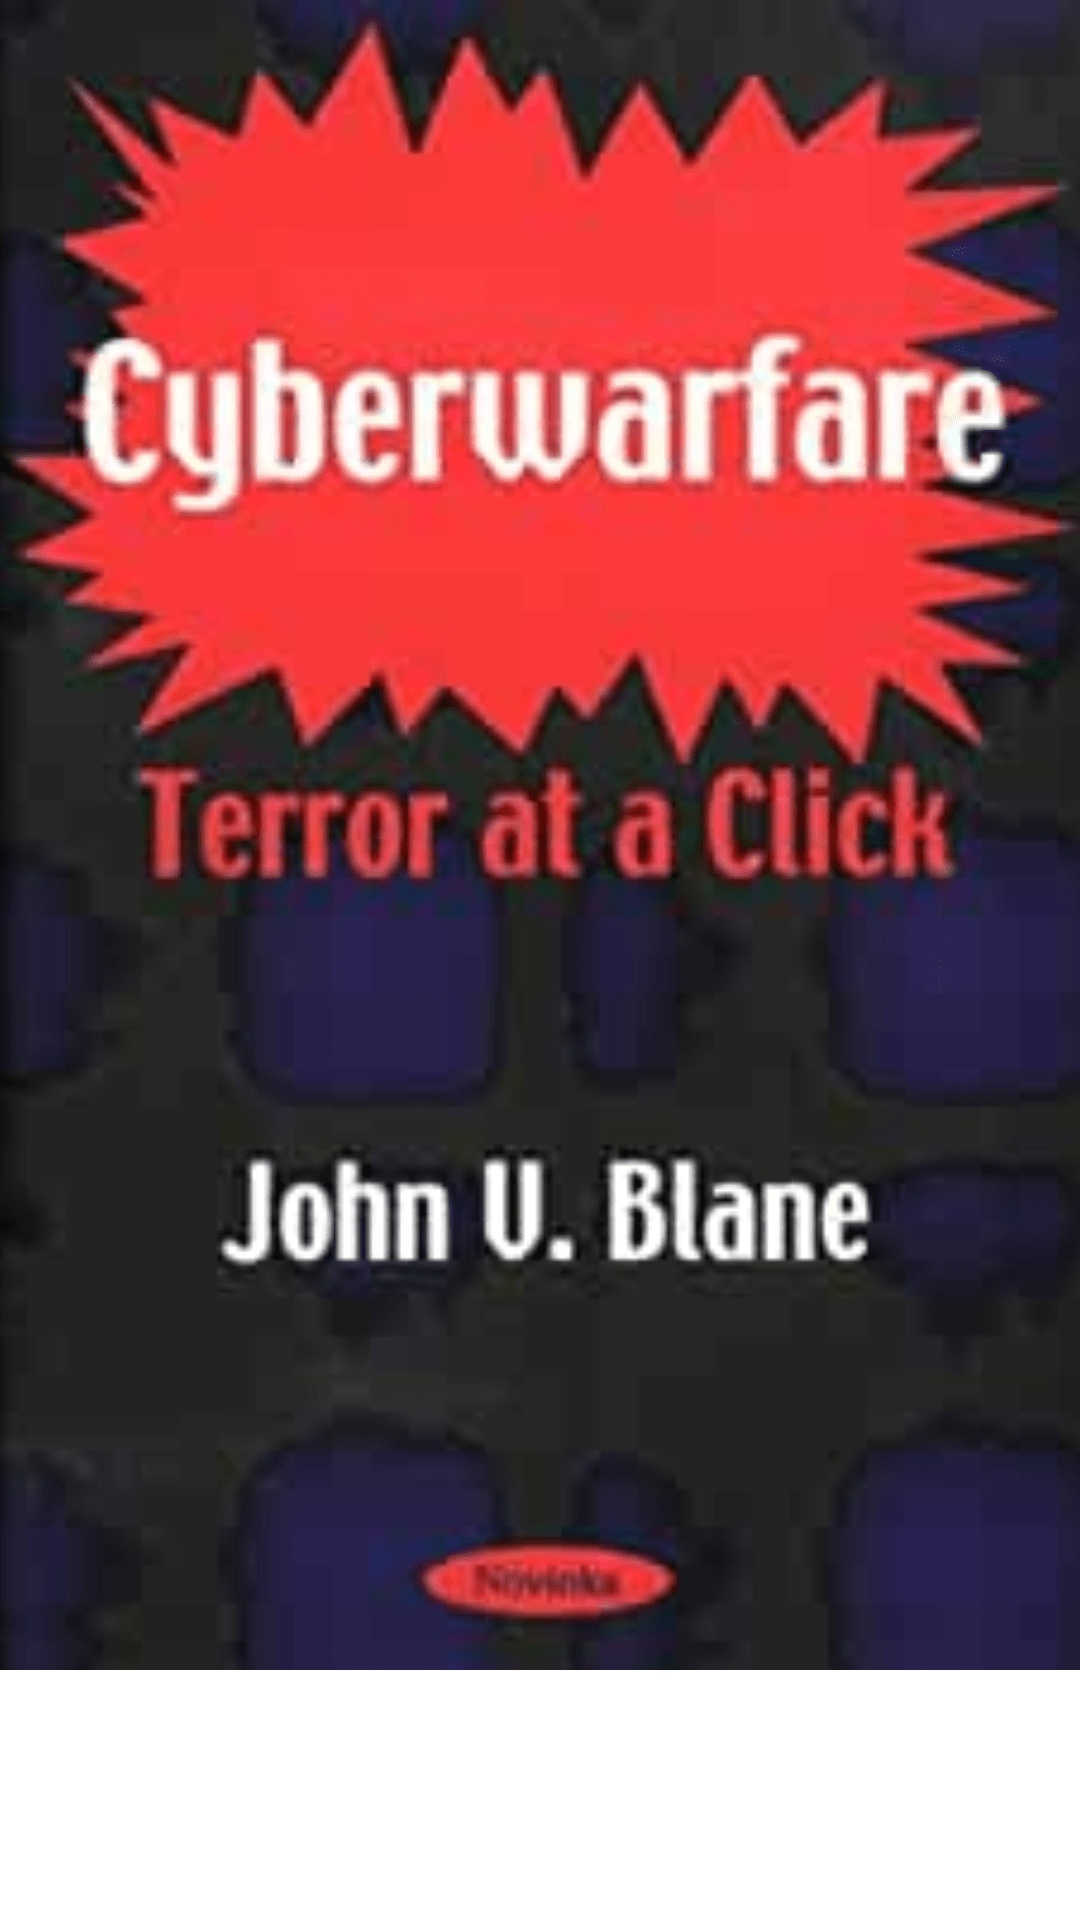 Cyberwarfare: Terror at a Click